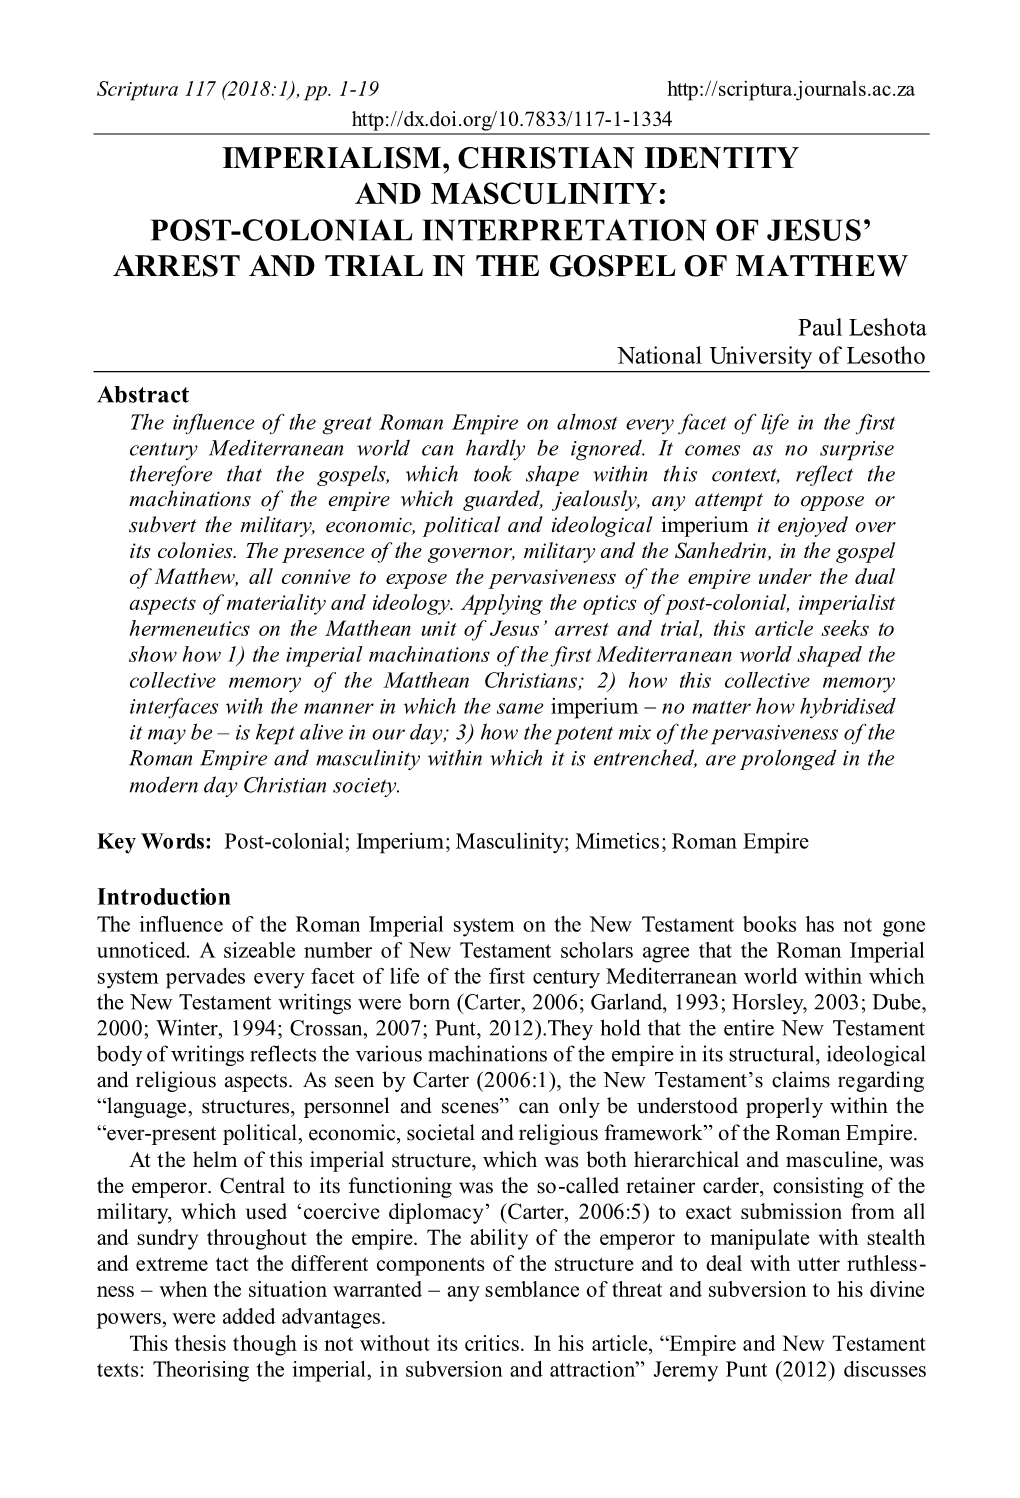 Post-Colonial Interpretation of Jesus' Arrest and Trial In